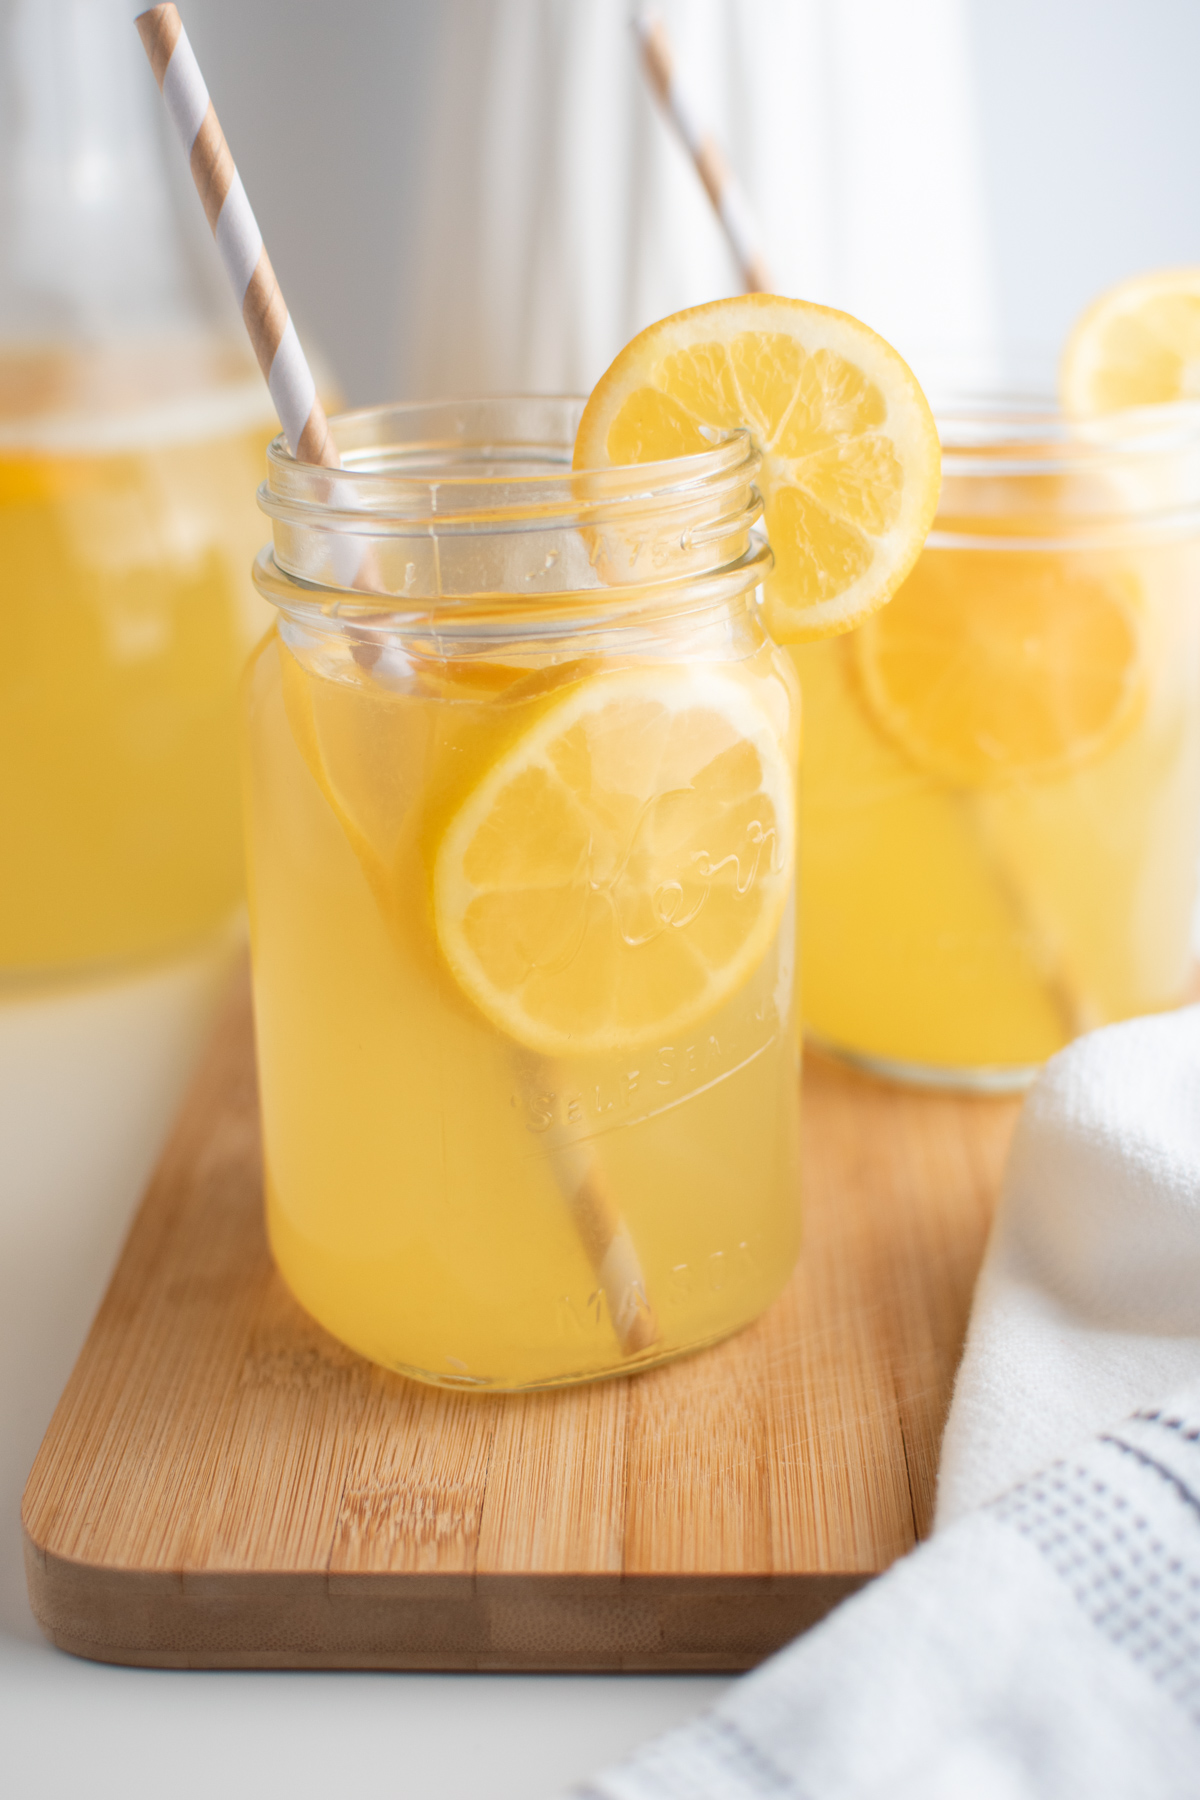 Glass cups of Meyer lemon lemonade on wood board with lemon garnish.